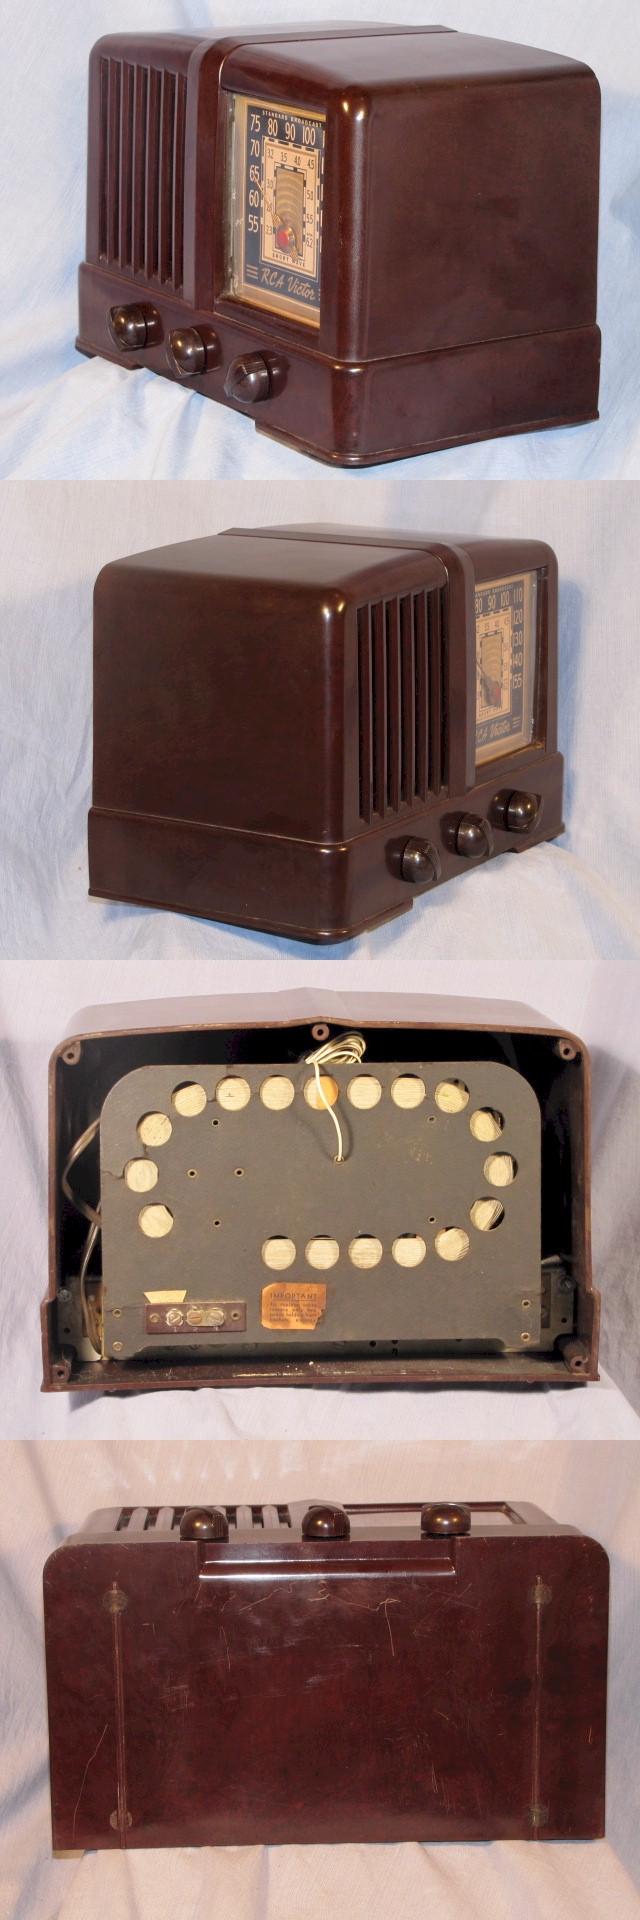 RCA Victor 46X12 (1940)